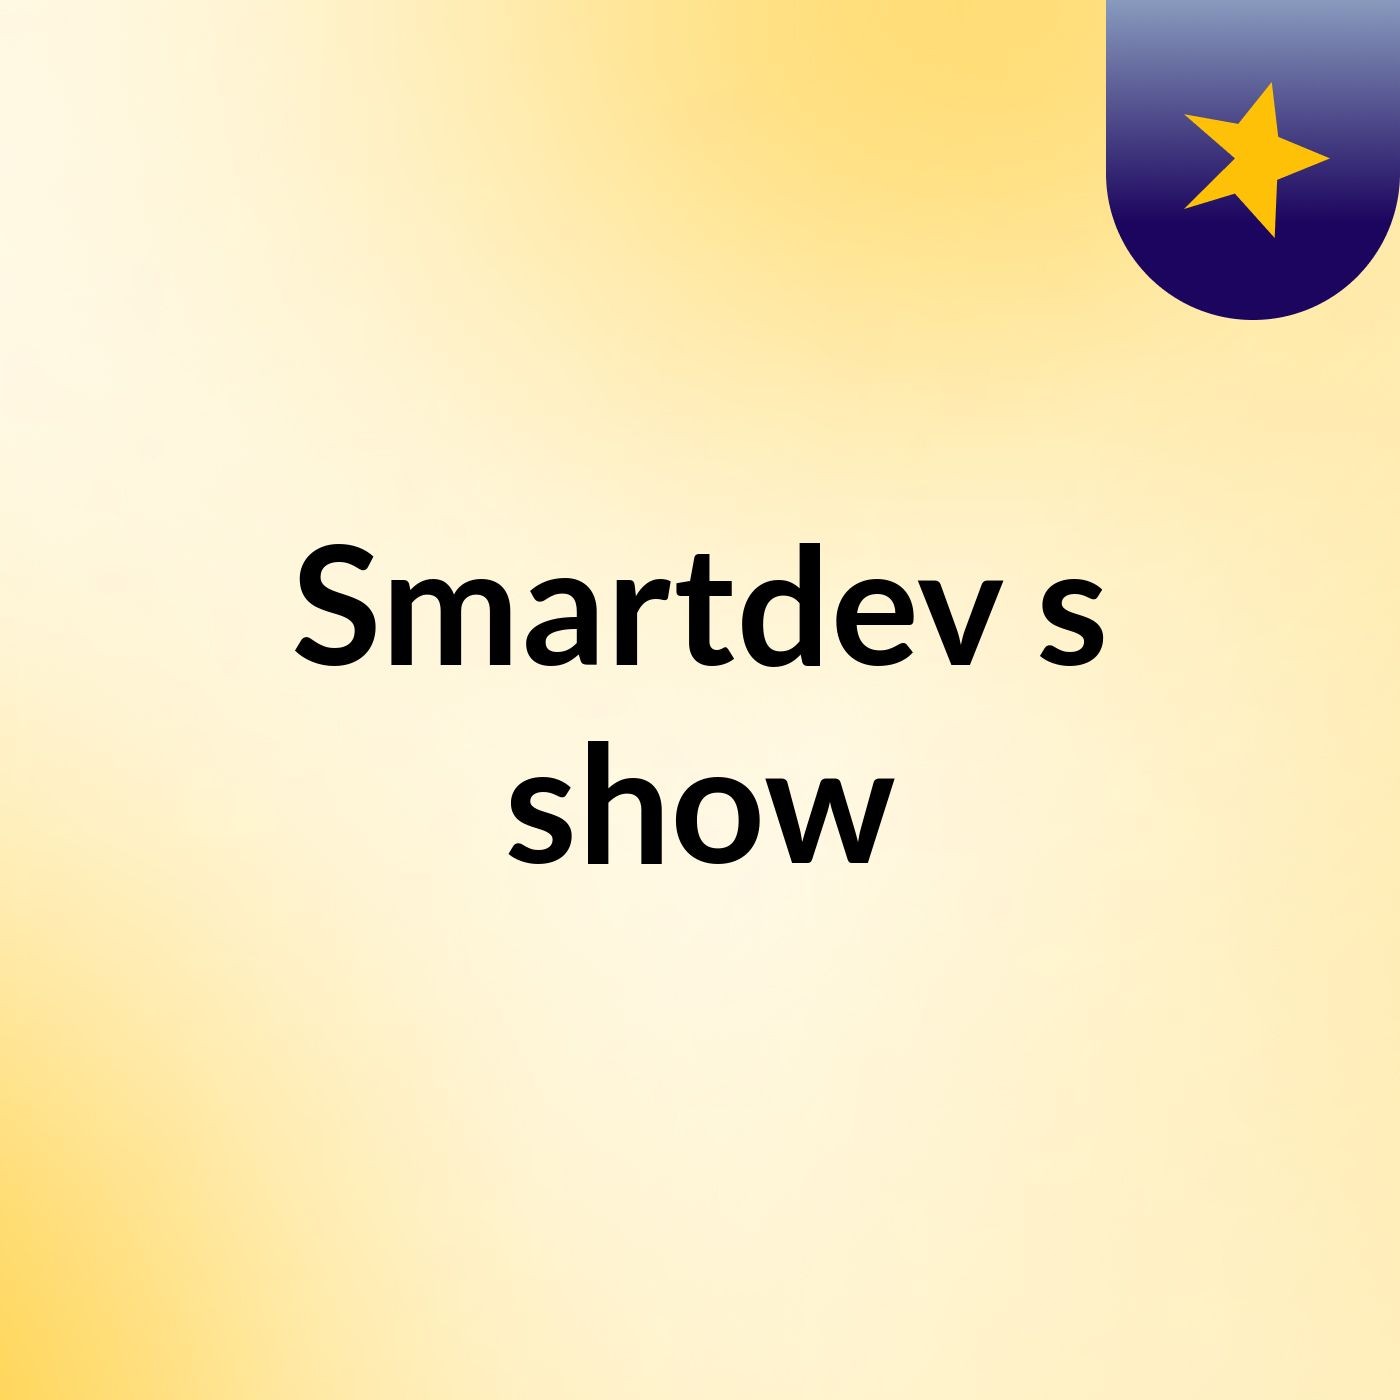 Smartdev's show